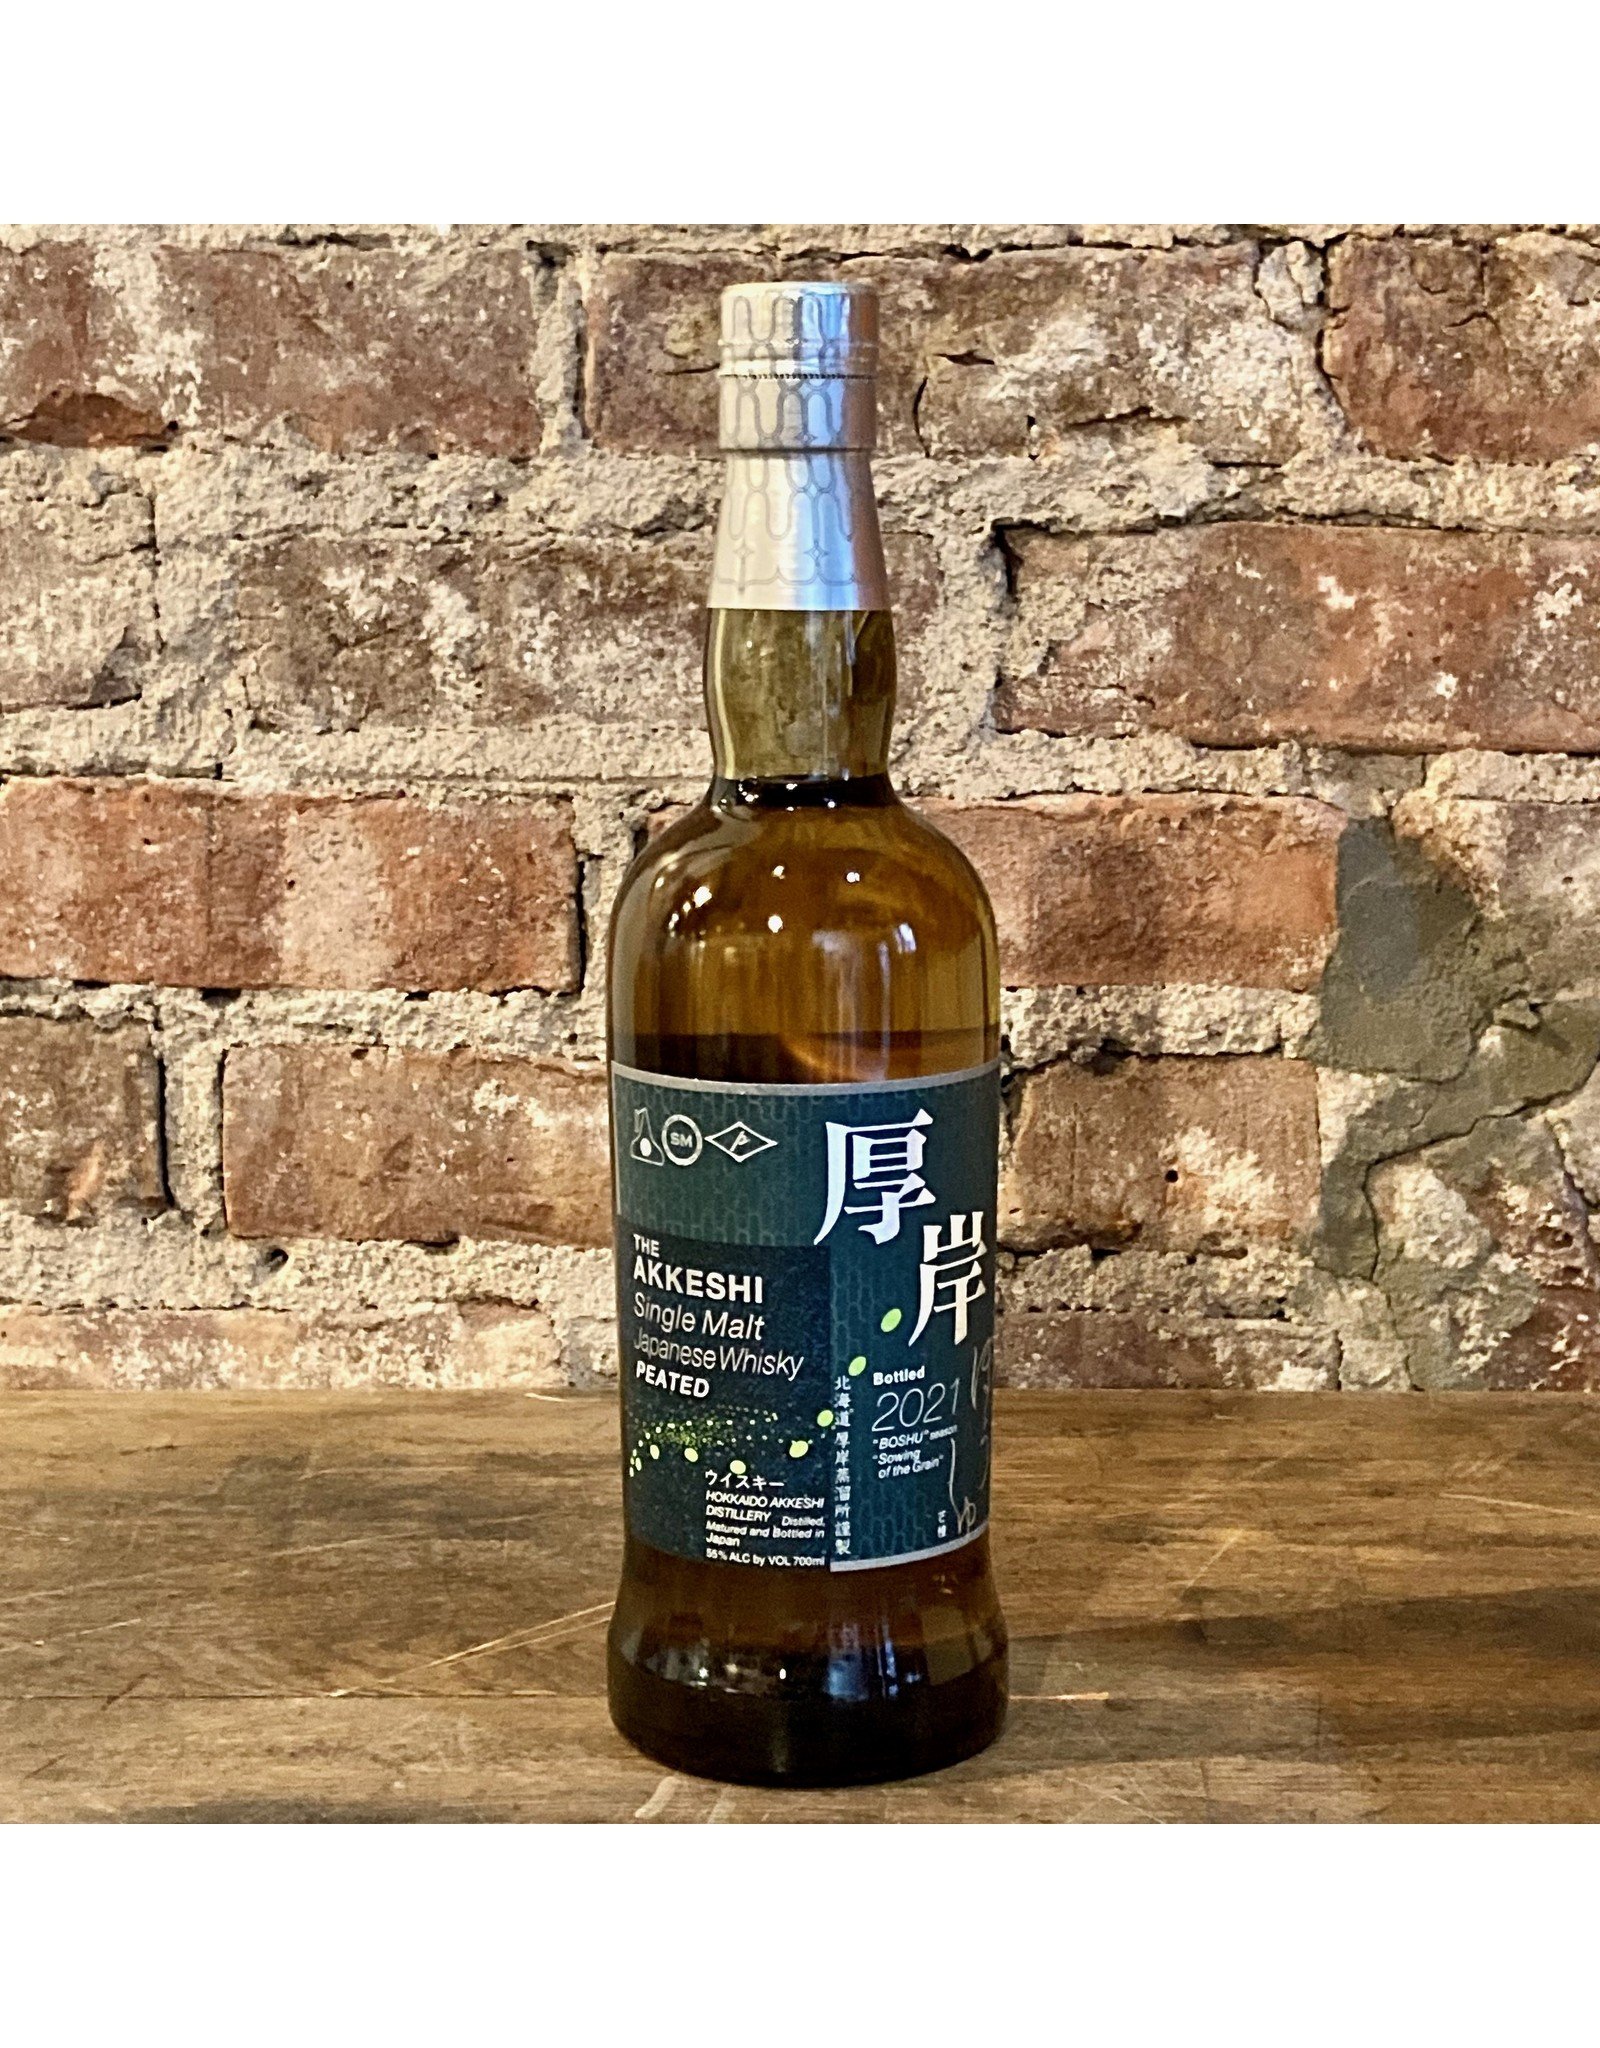 Single Malt Whisky, 'Boshu Sowing of the Grain,' The Akkeshi (2021 Release)